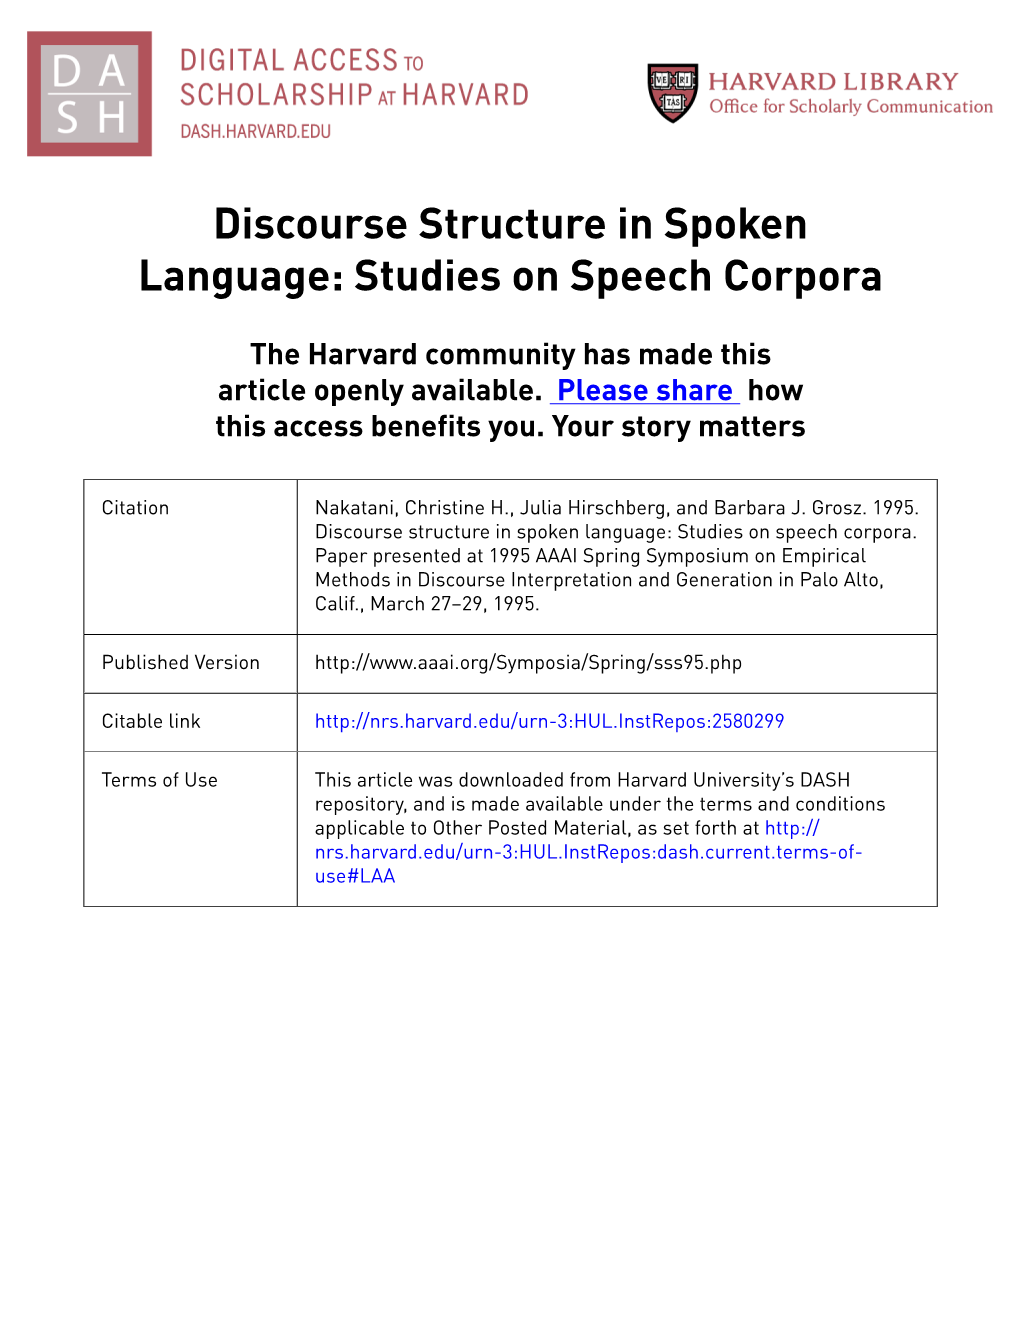 Discourse Structure in Spoken Language: Studies on Speech Corpora